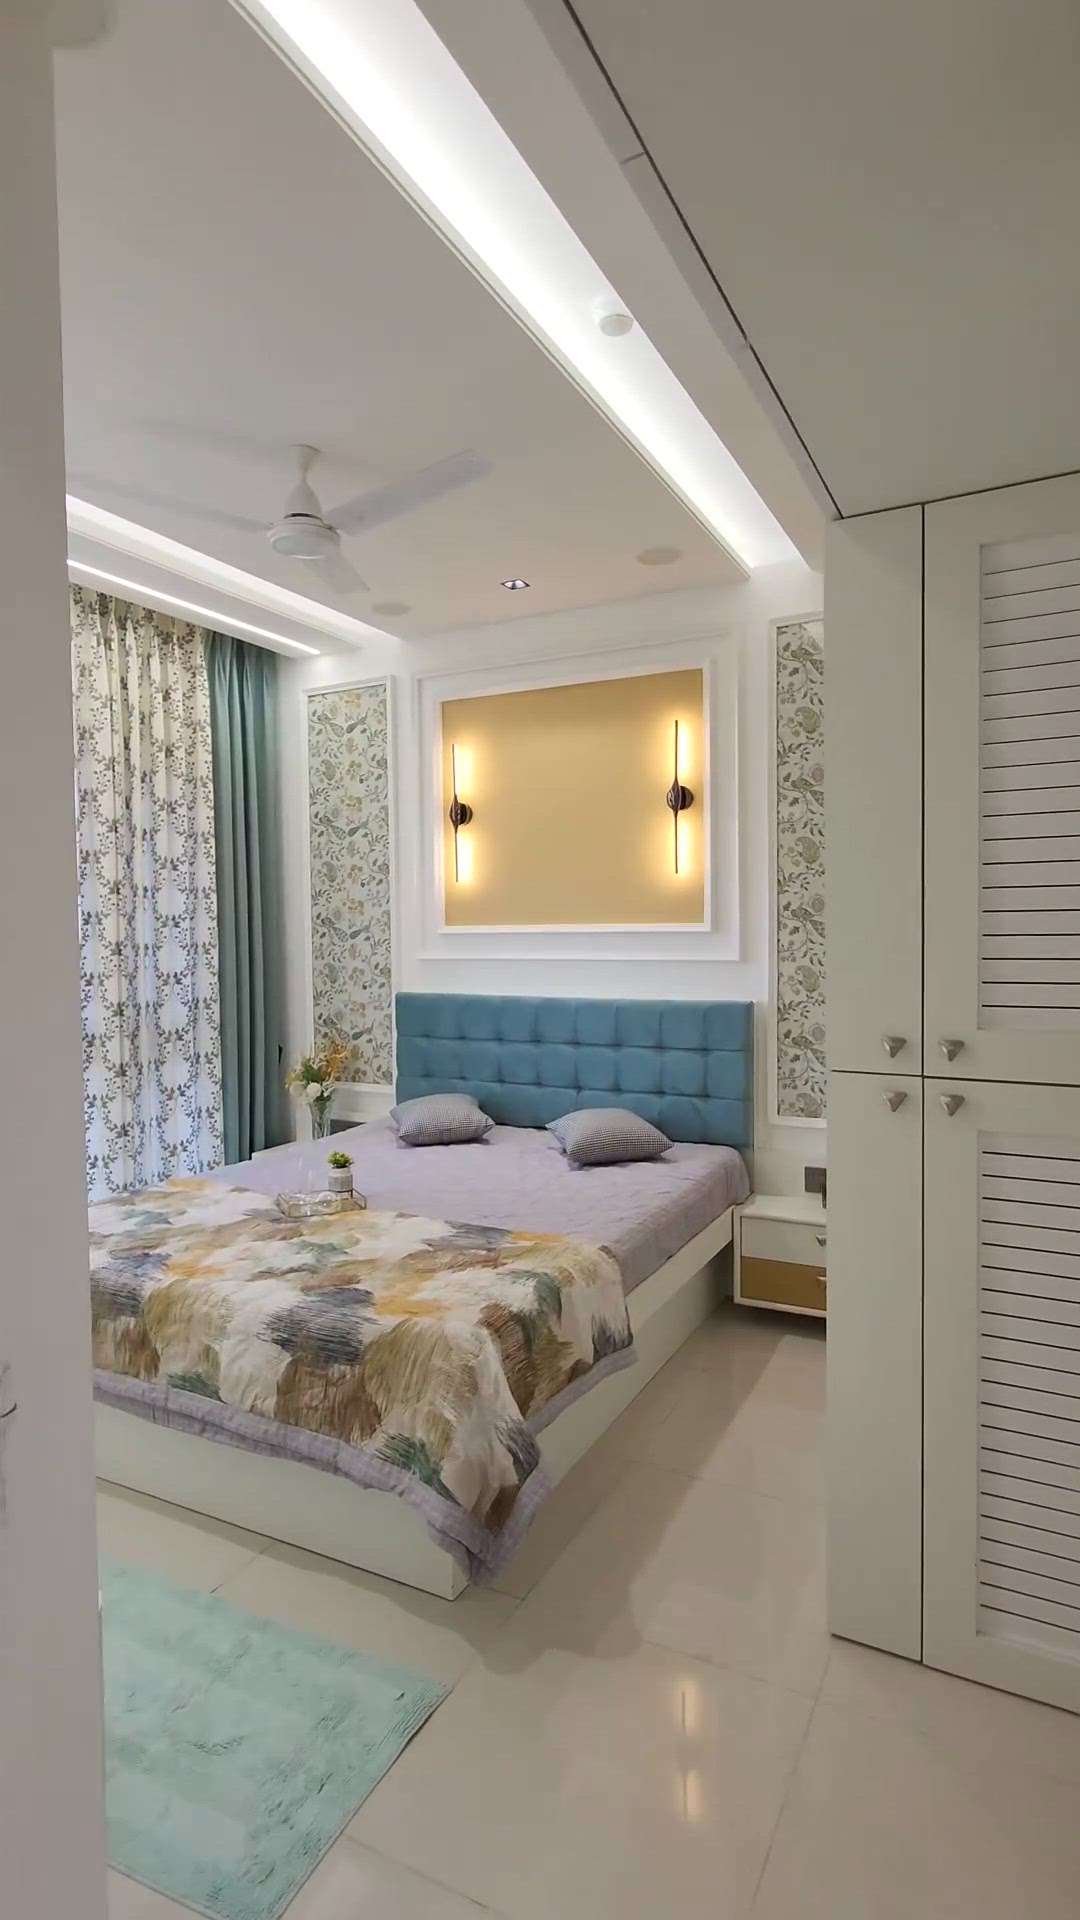 #InteriorDesigner #BedroomDecor #ModularKitchen #modularwardrobe #sofa #DiningTable